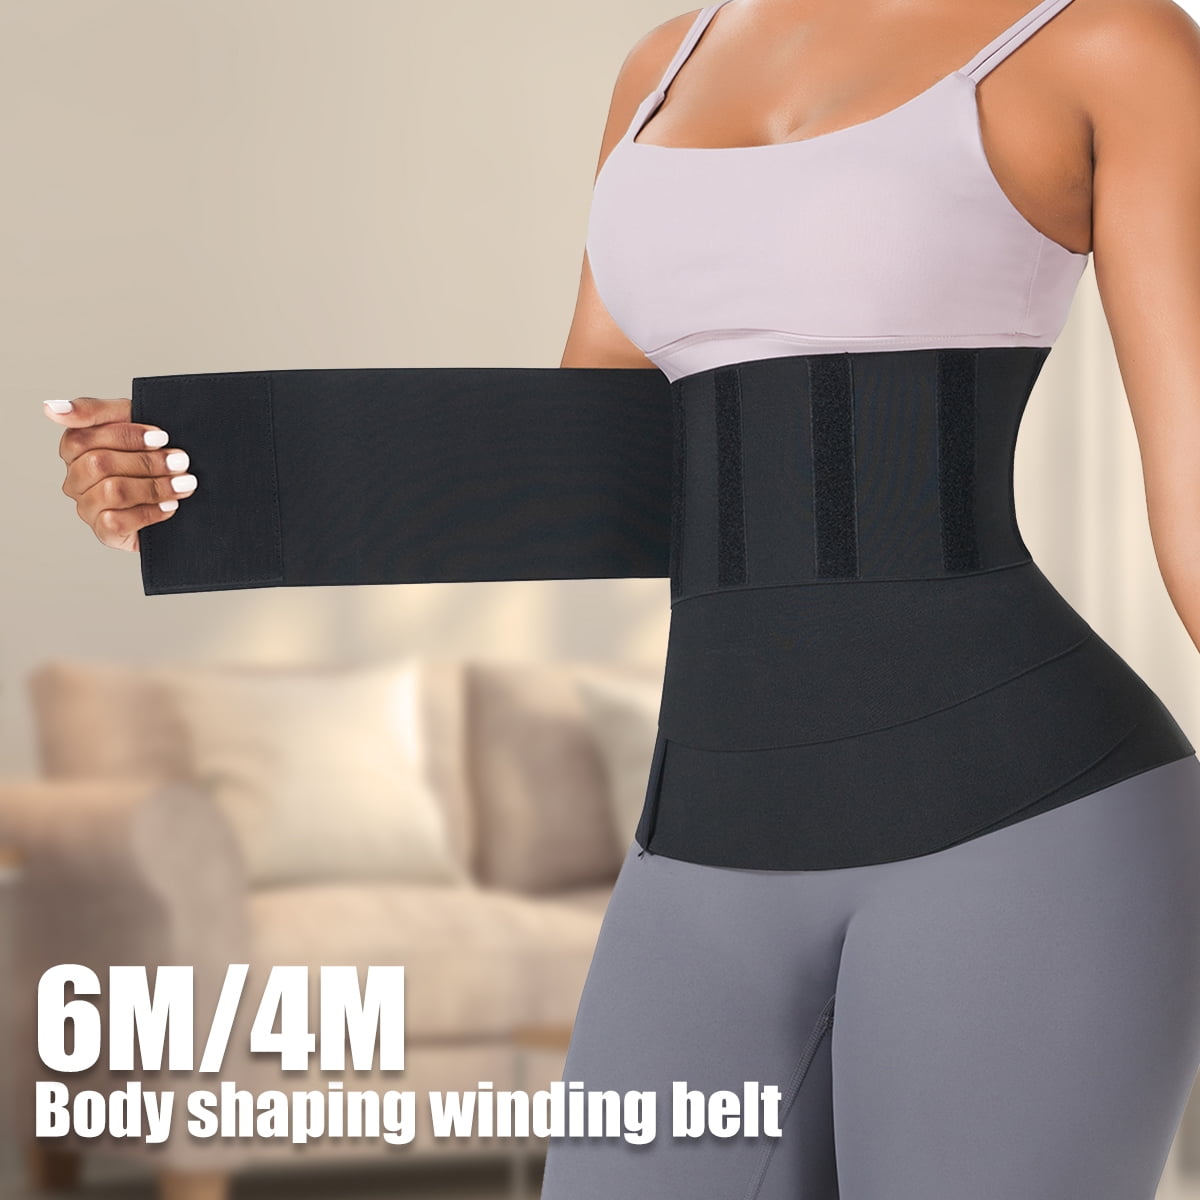 Snatch Me Up Bandage Wrap Lumbar Waist Support Slimming Belt Trimmer Body Shaper 